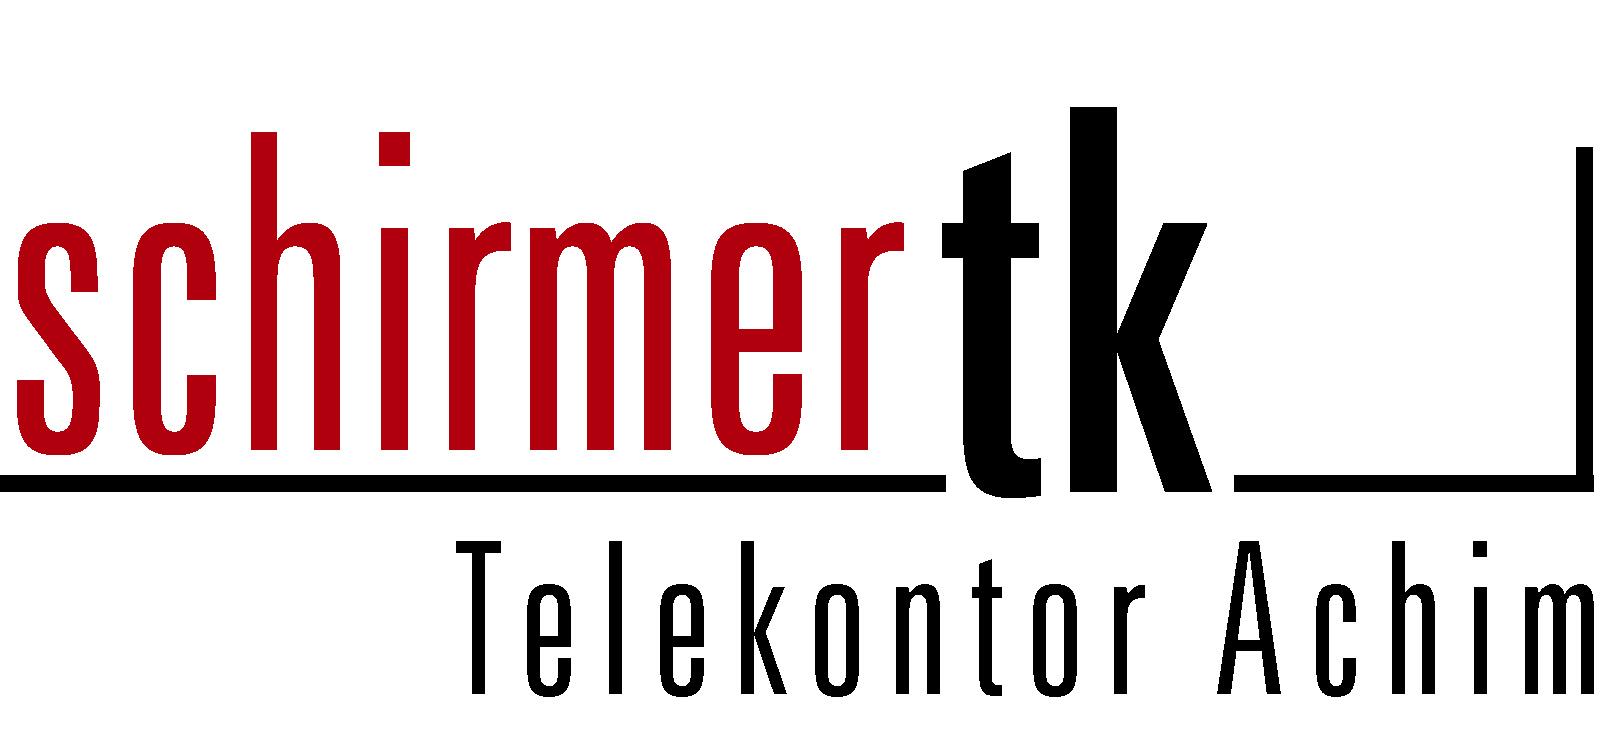 Logo schirmer tk - Telekontor Achim